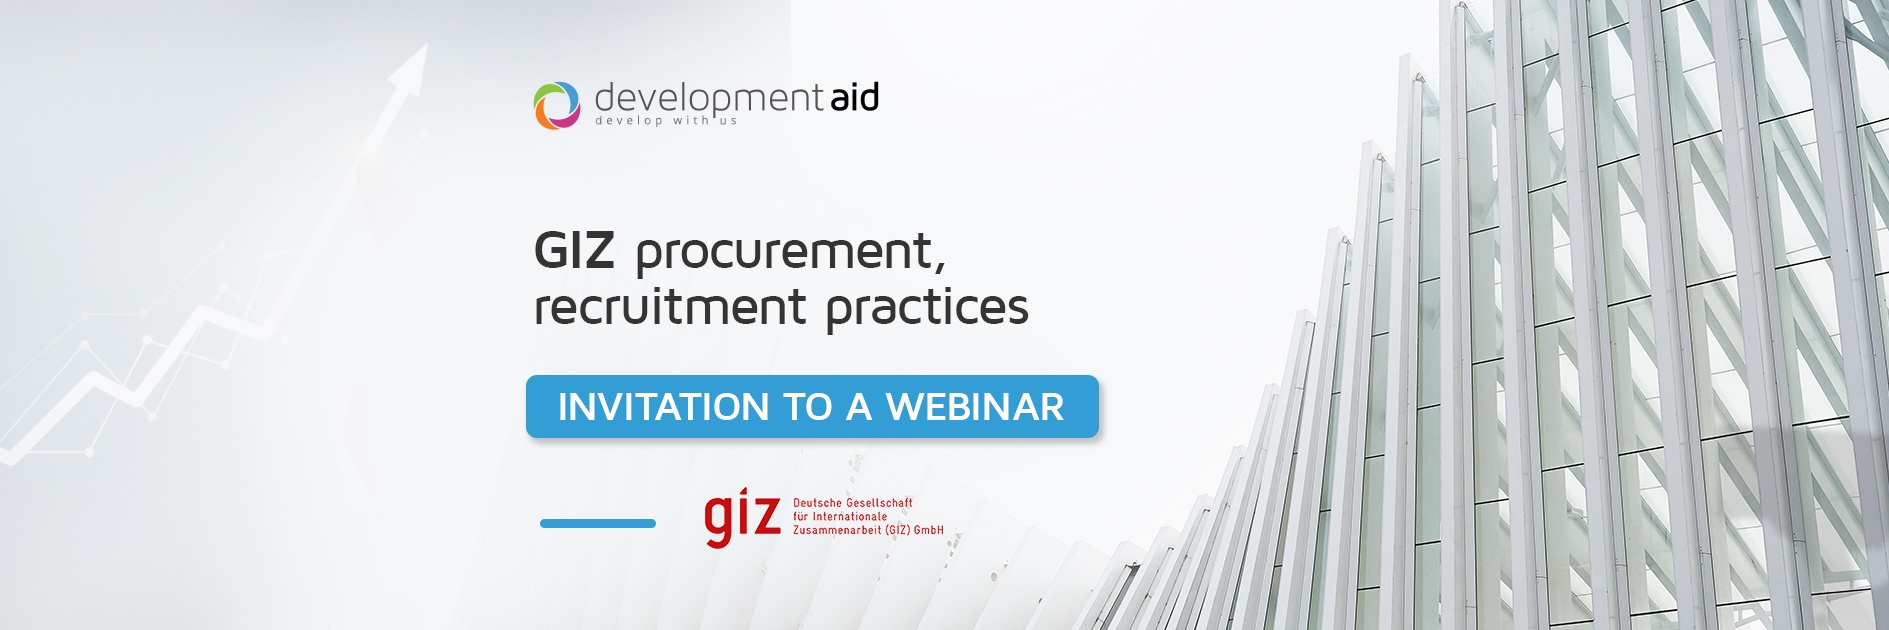 GIZ procurement, recruitment practices | Invitation to a Webinar